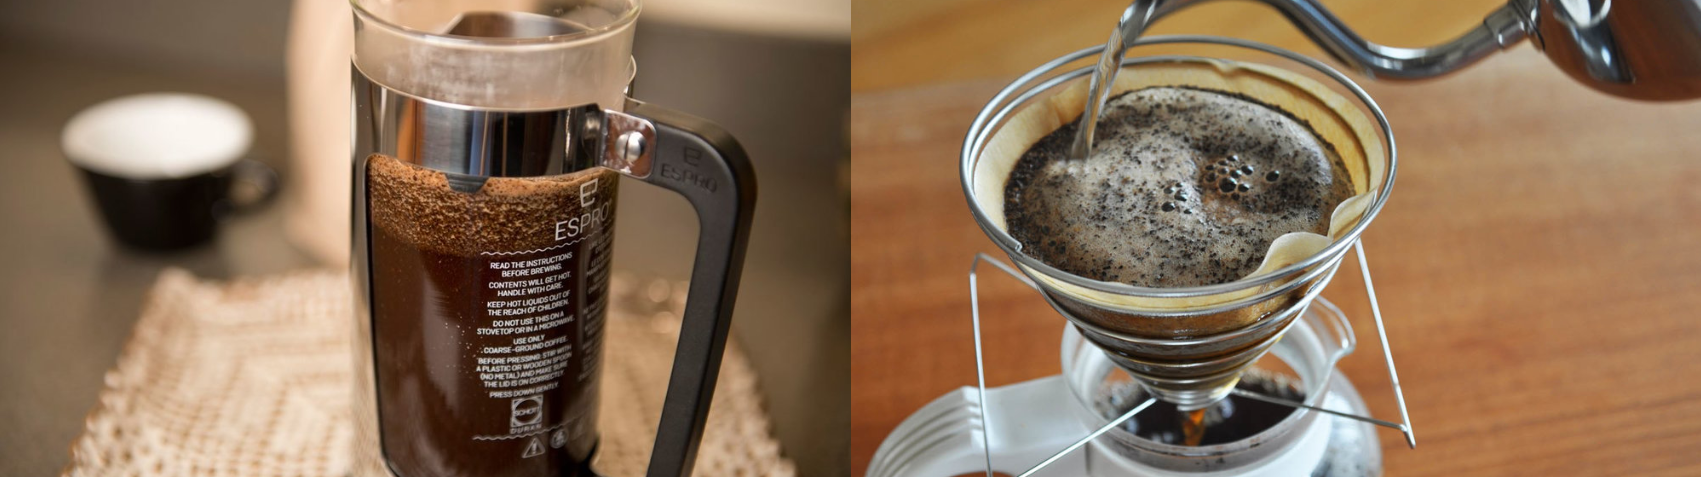 Pour Over Coffee Dripper DOWAN